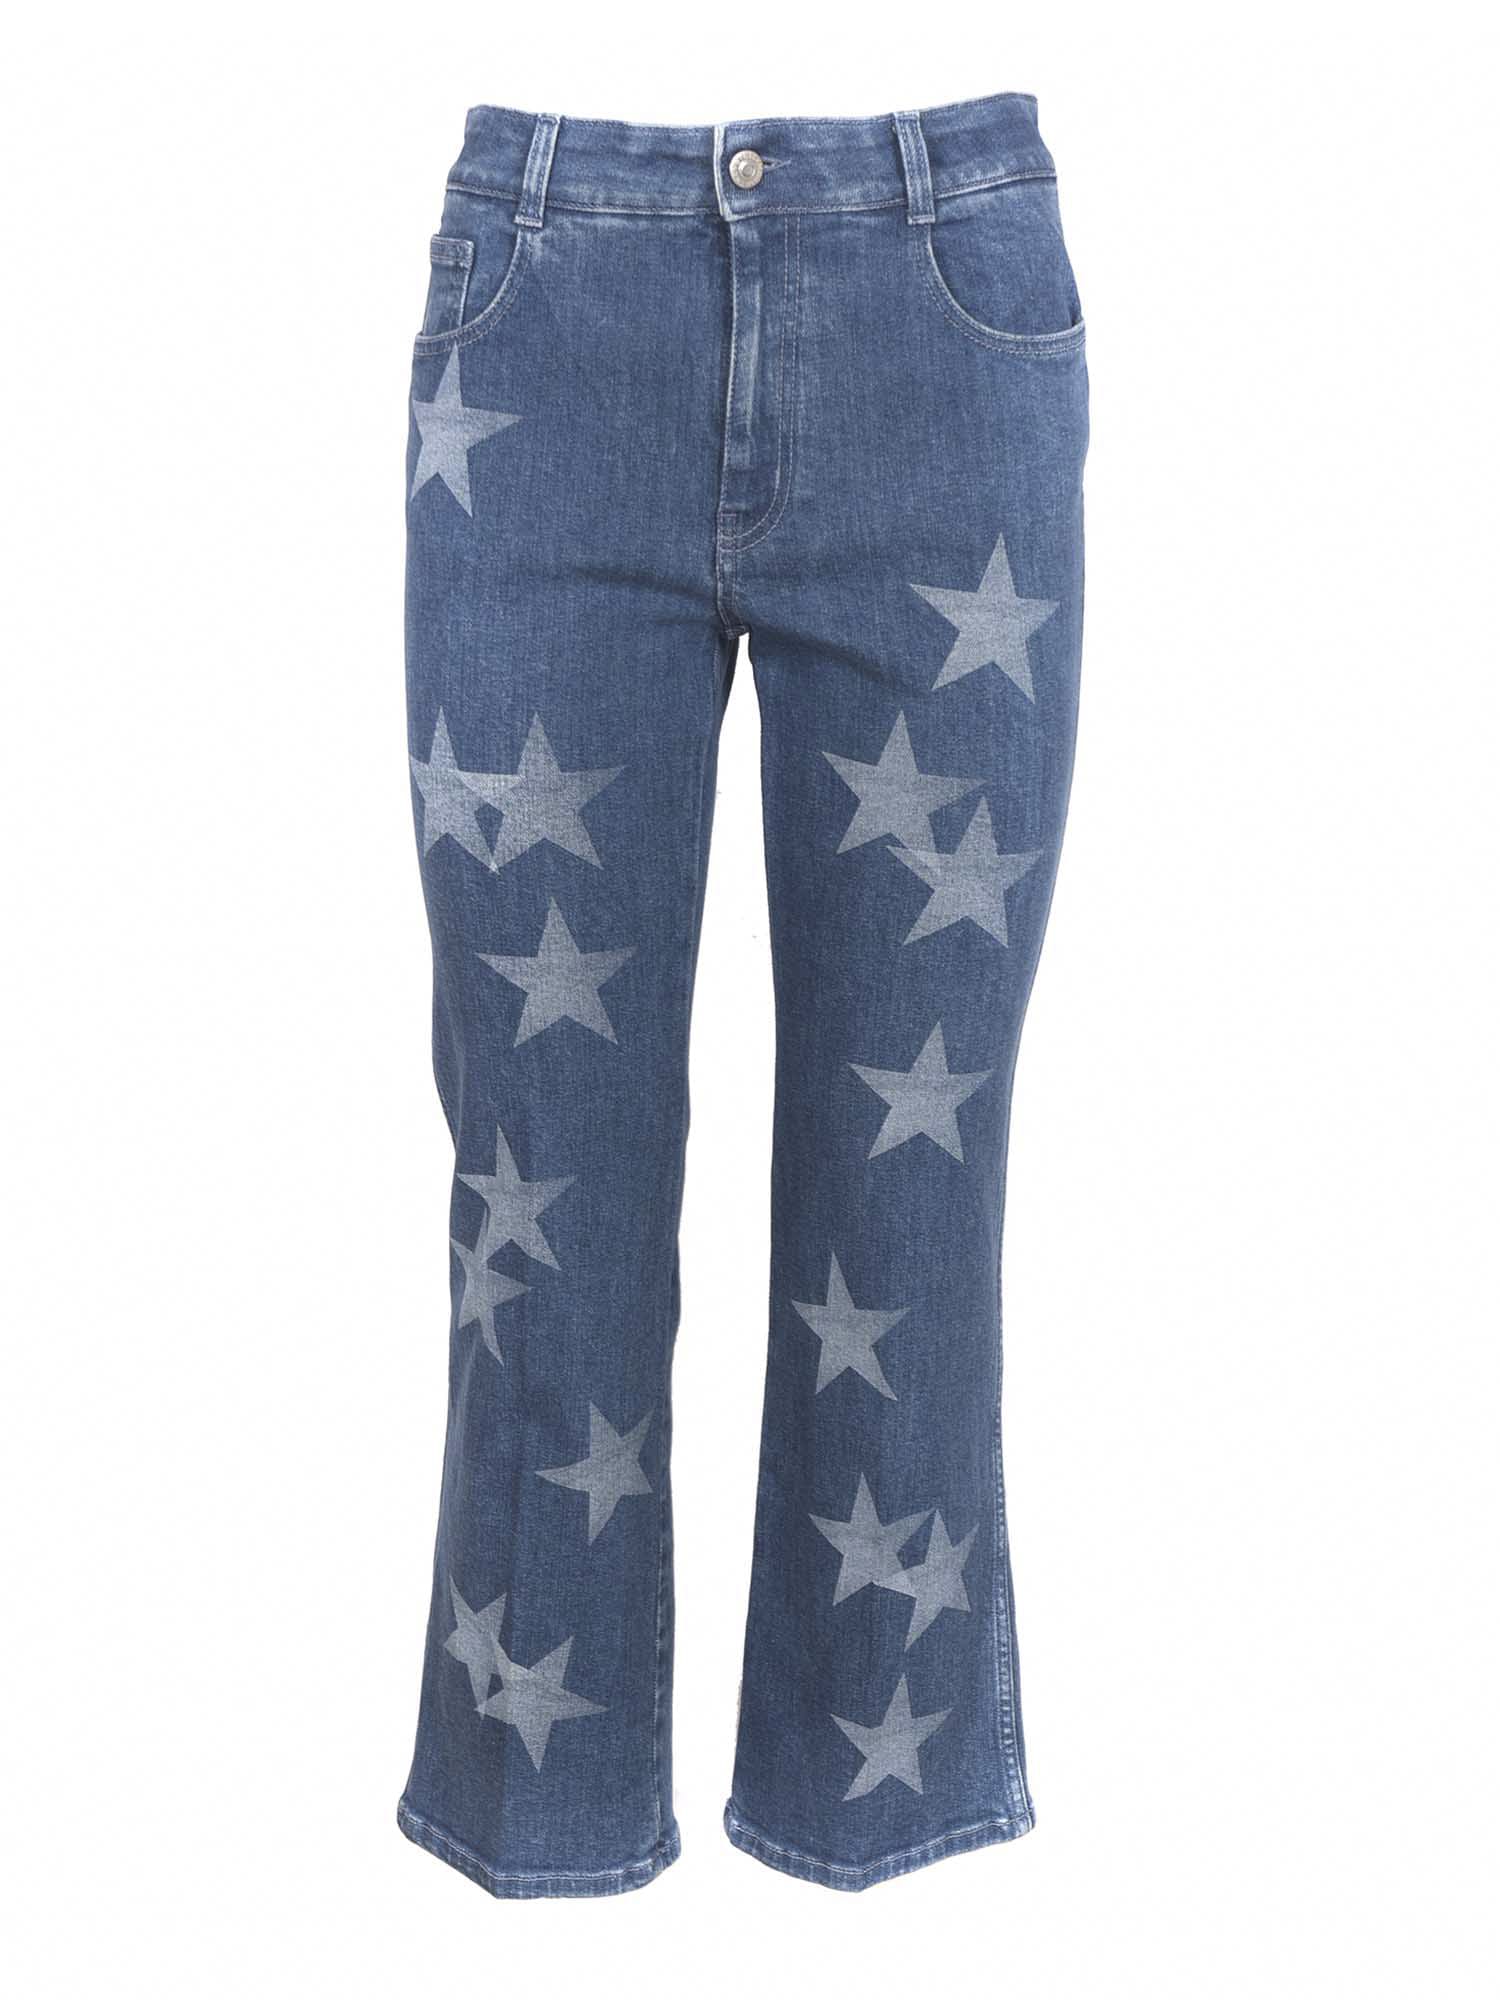 Stella McCartney New Crop New Star Jeans